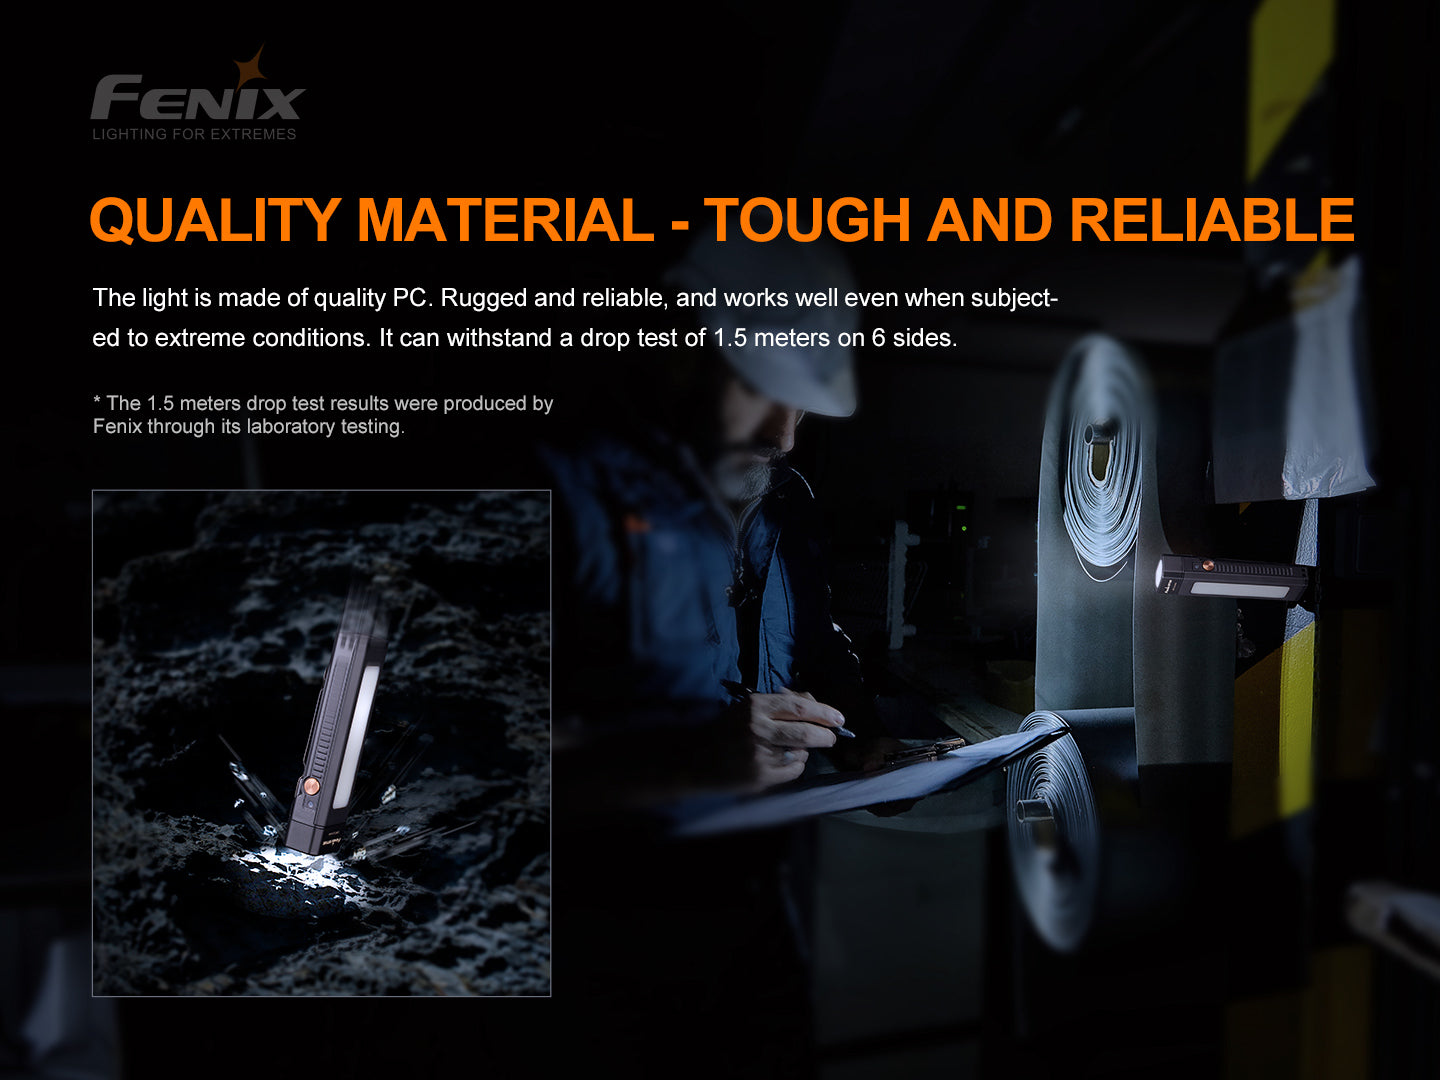 Fenix WT16R Rechargeable Multipurpose Work Light